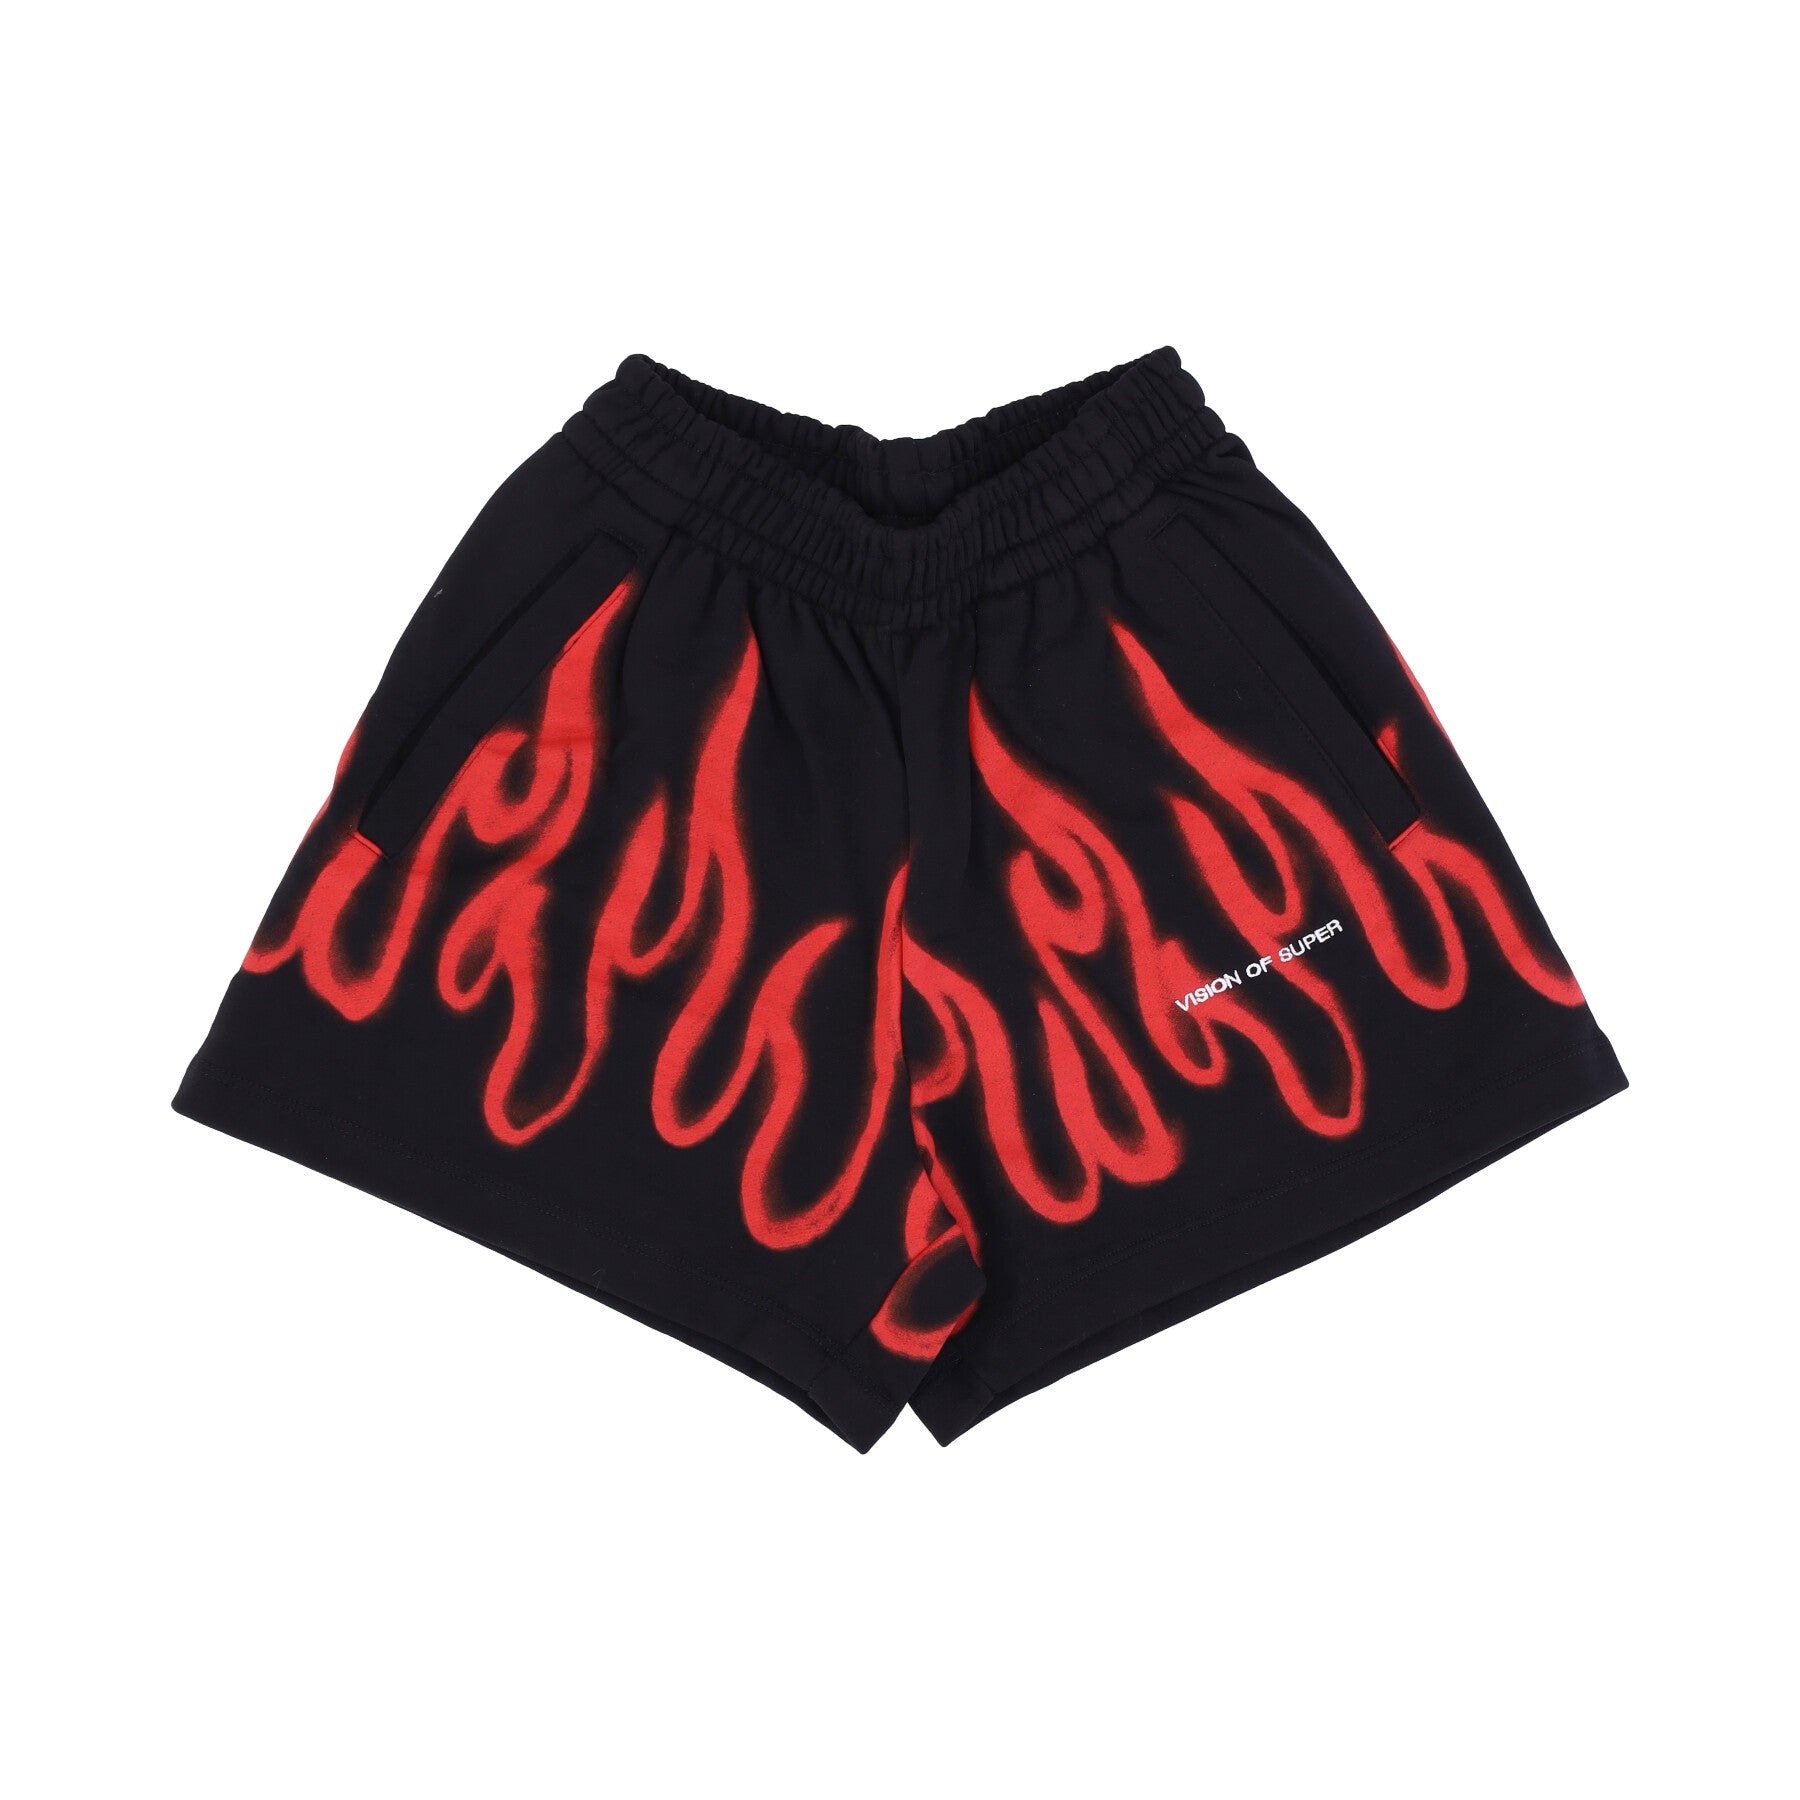 Spray Flames Shorts Women's Shorts Black/red